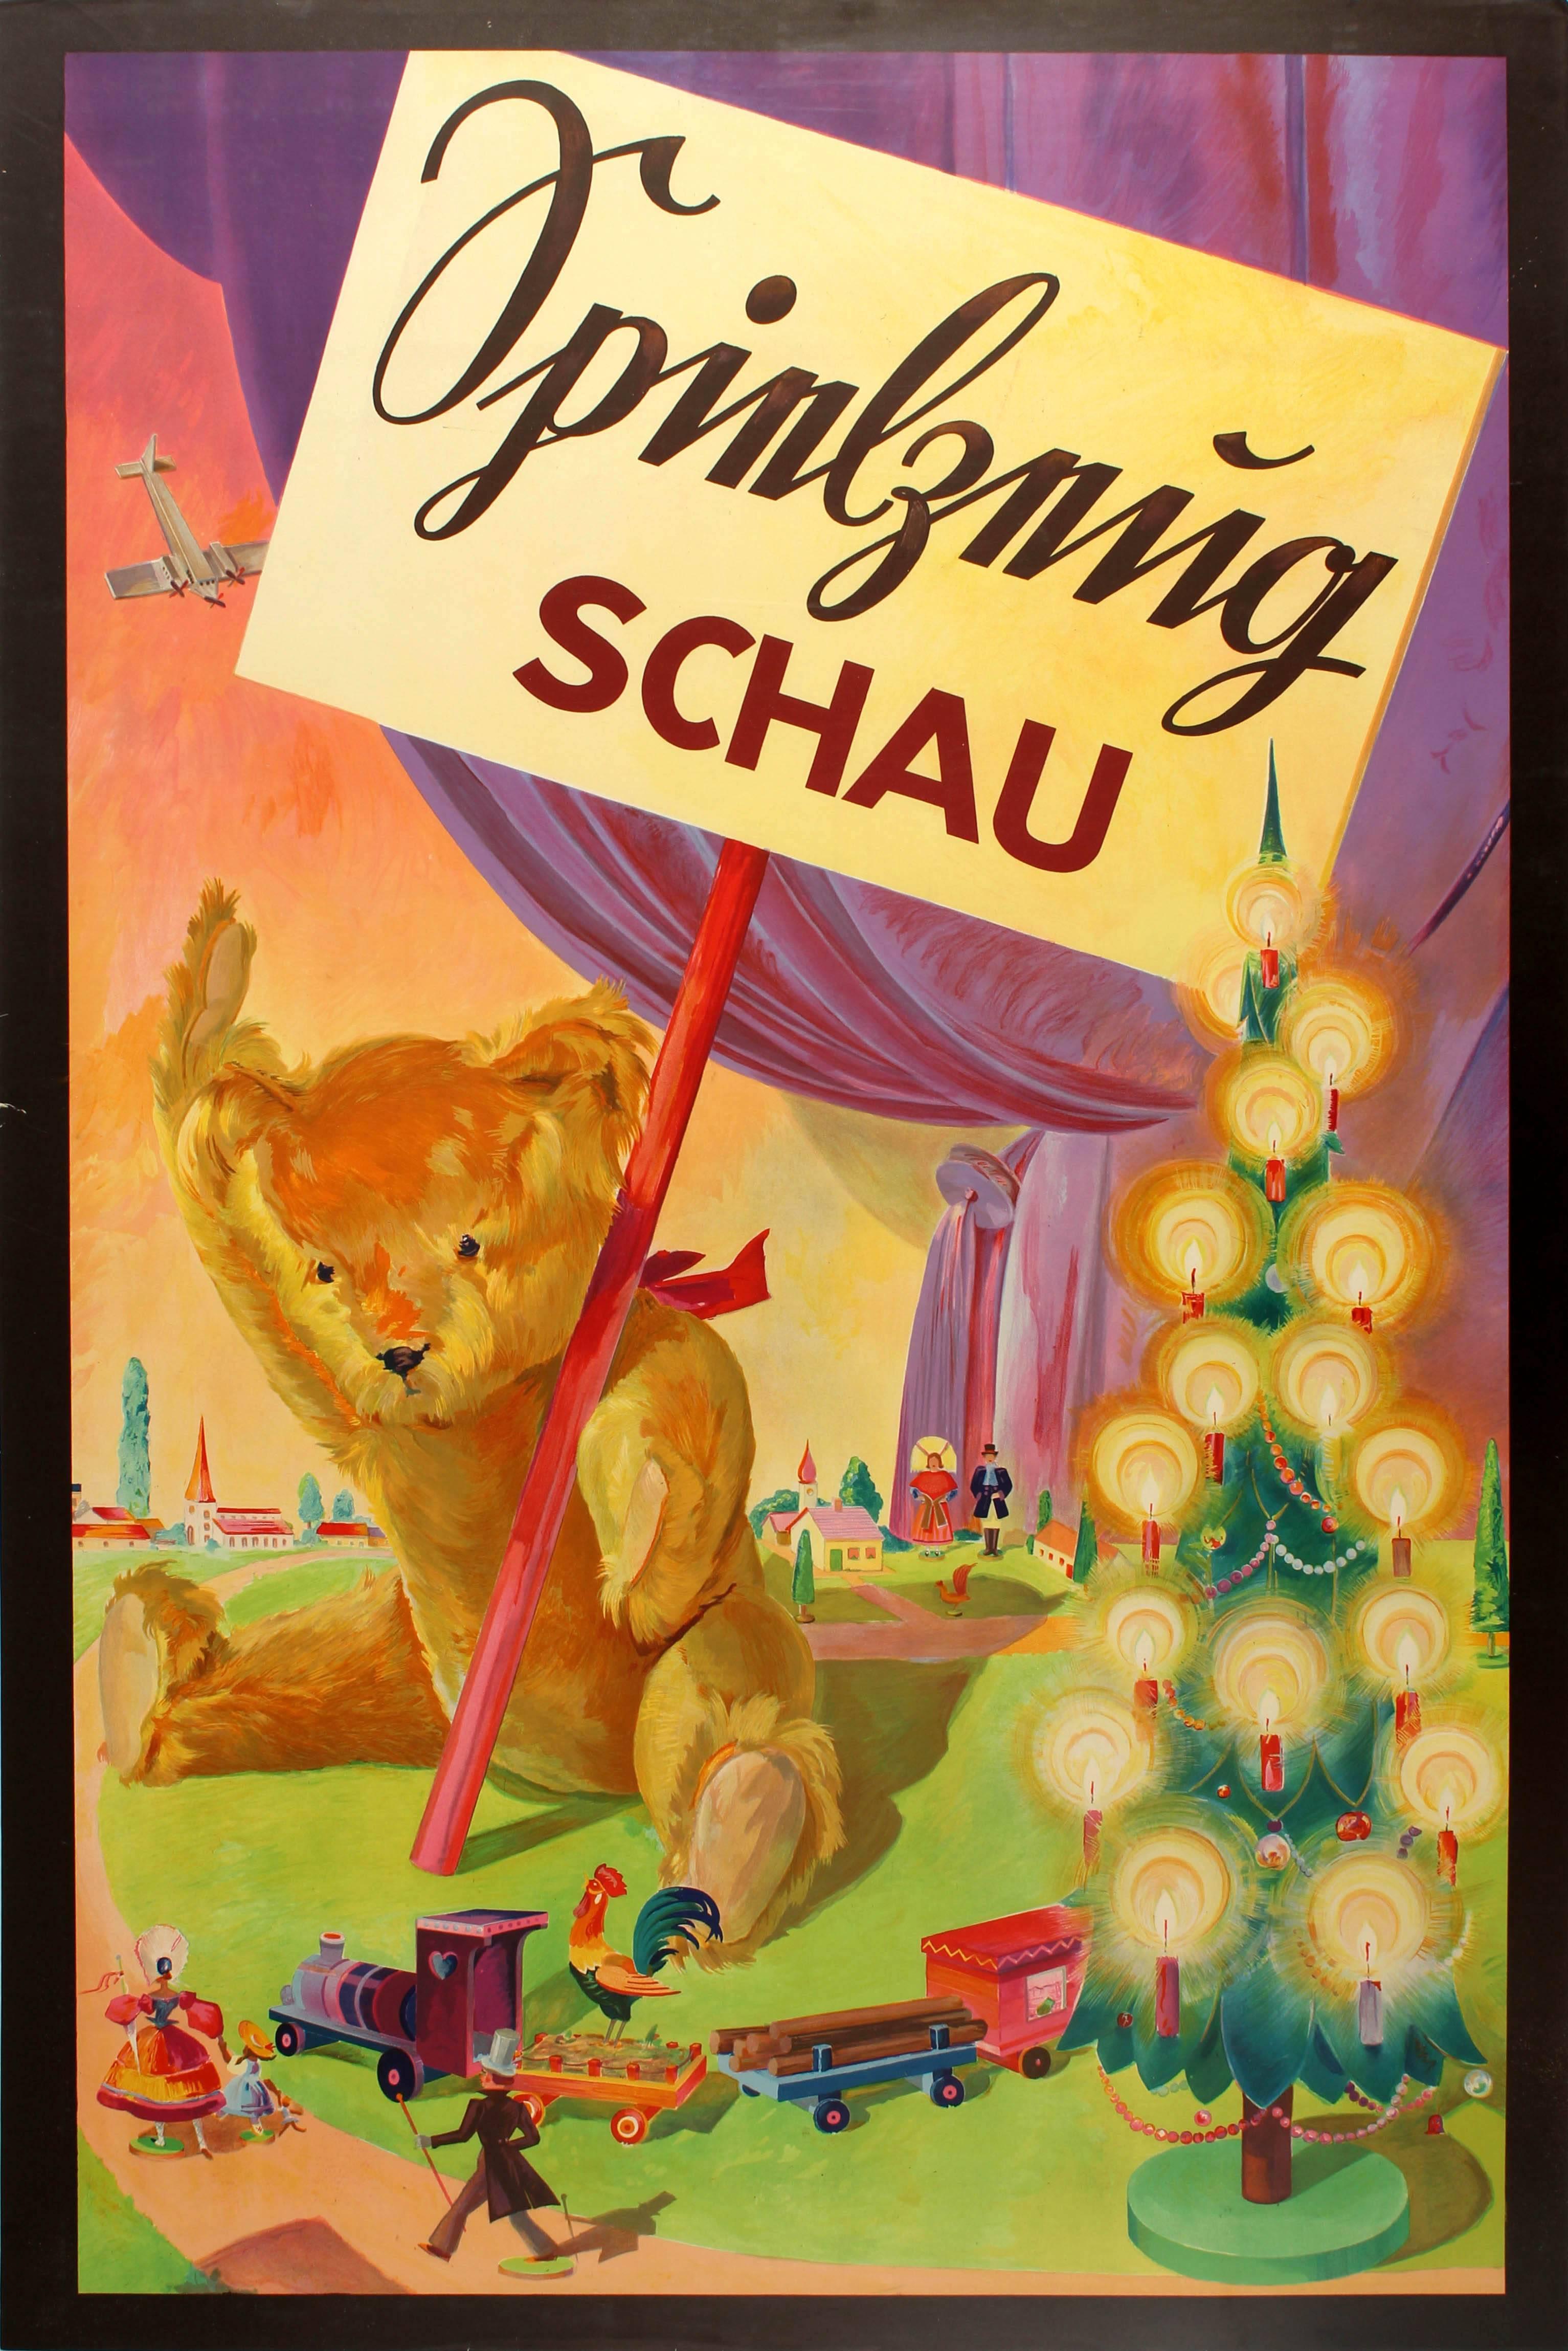 Unknown Print - Original Vintage Children's Toy Exhibition Poster Featuring a Teddy Bear & Train